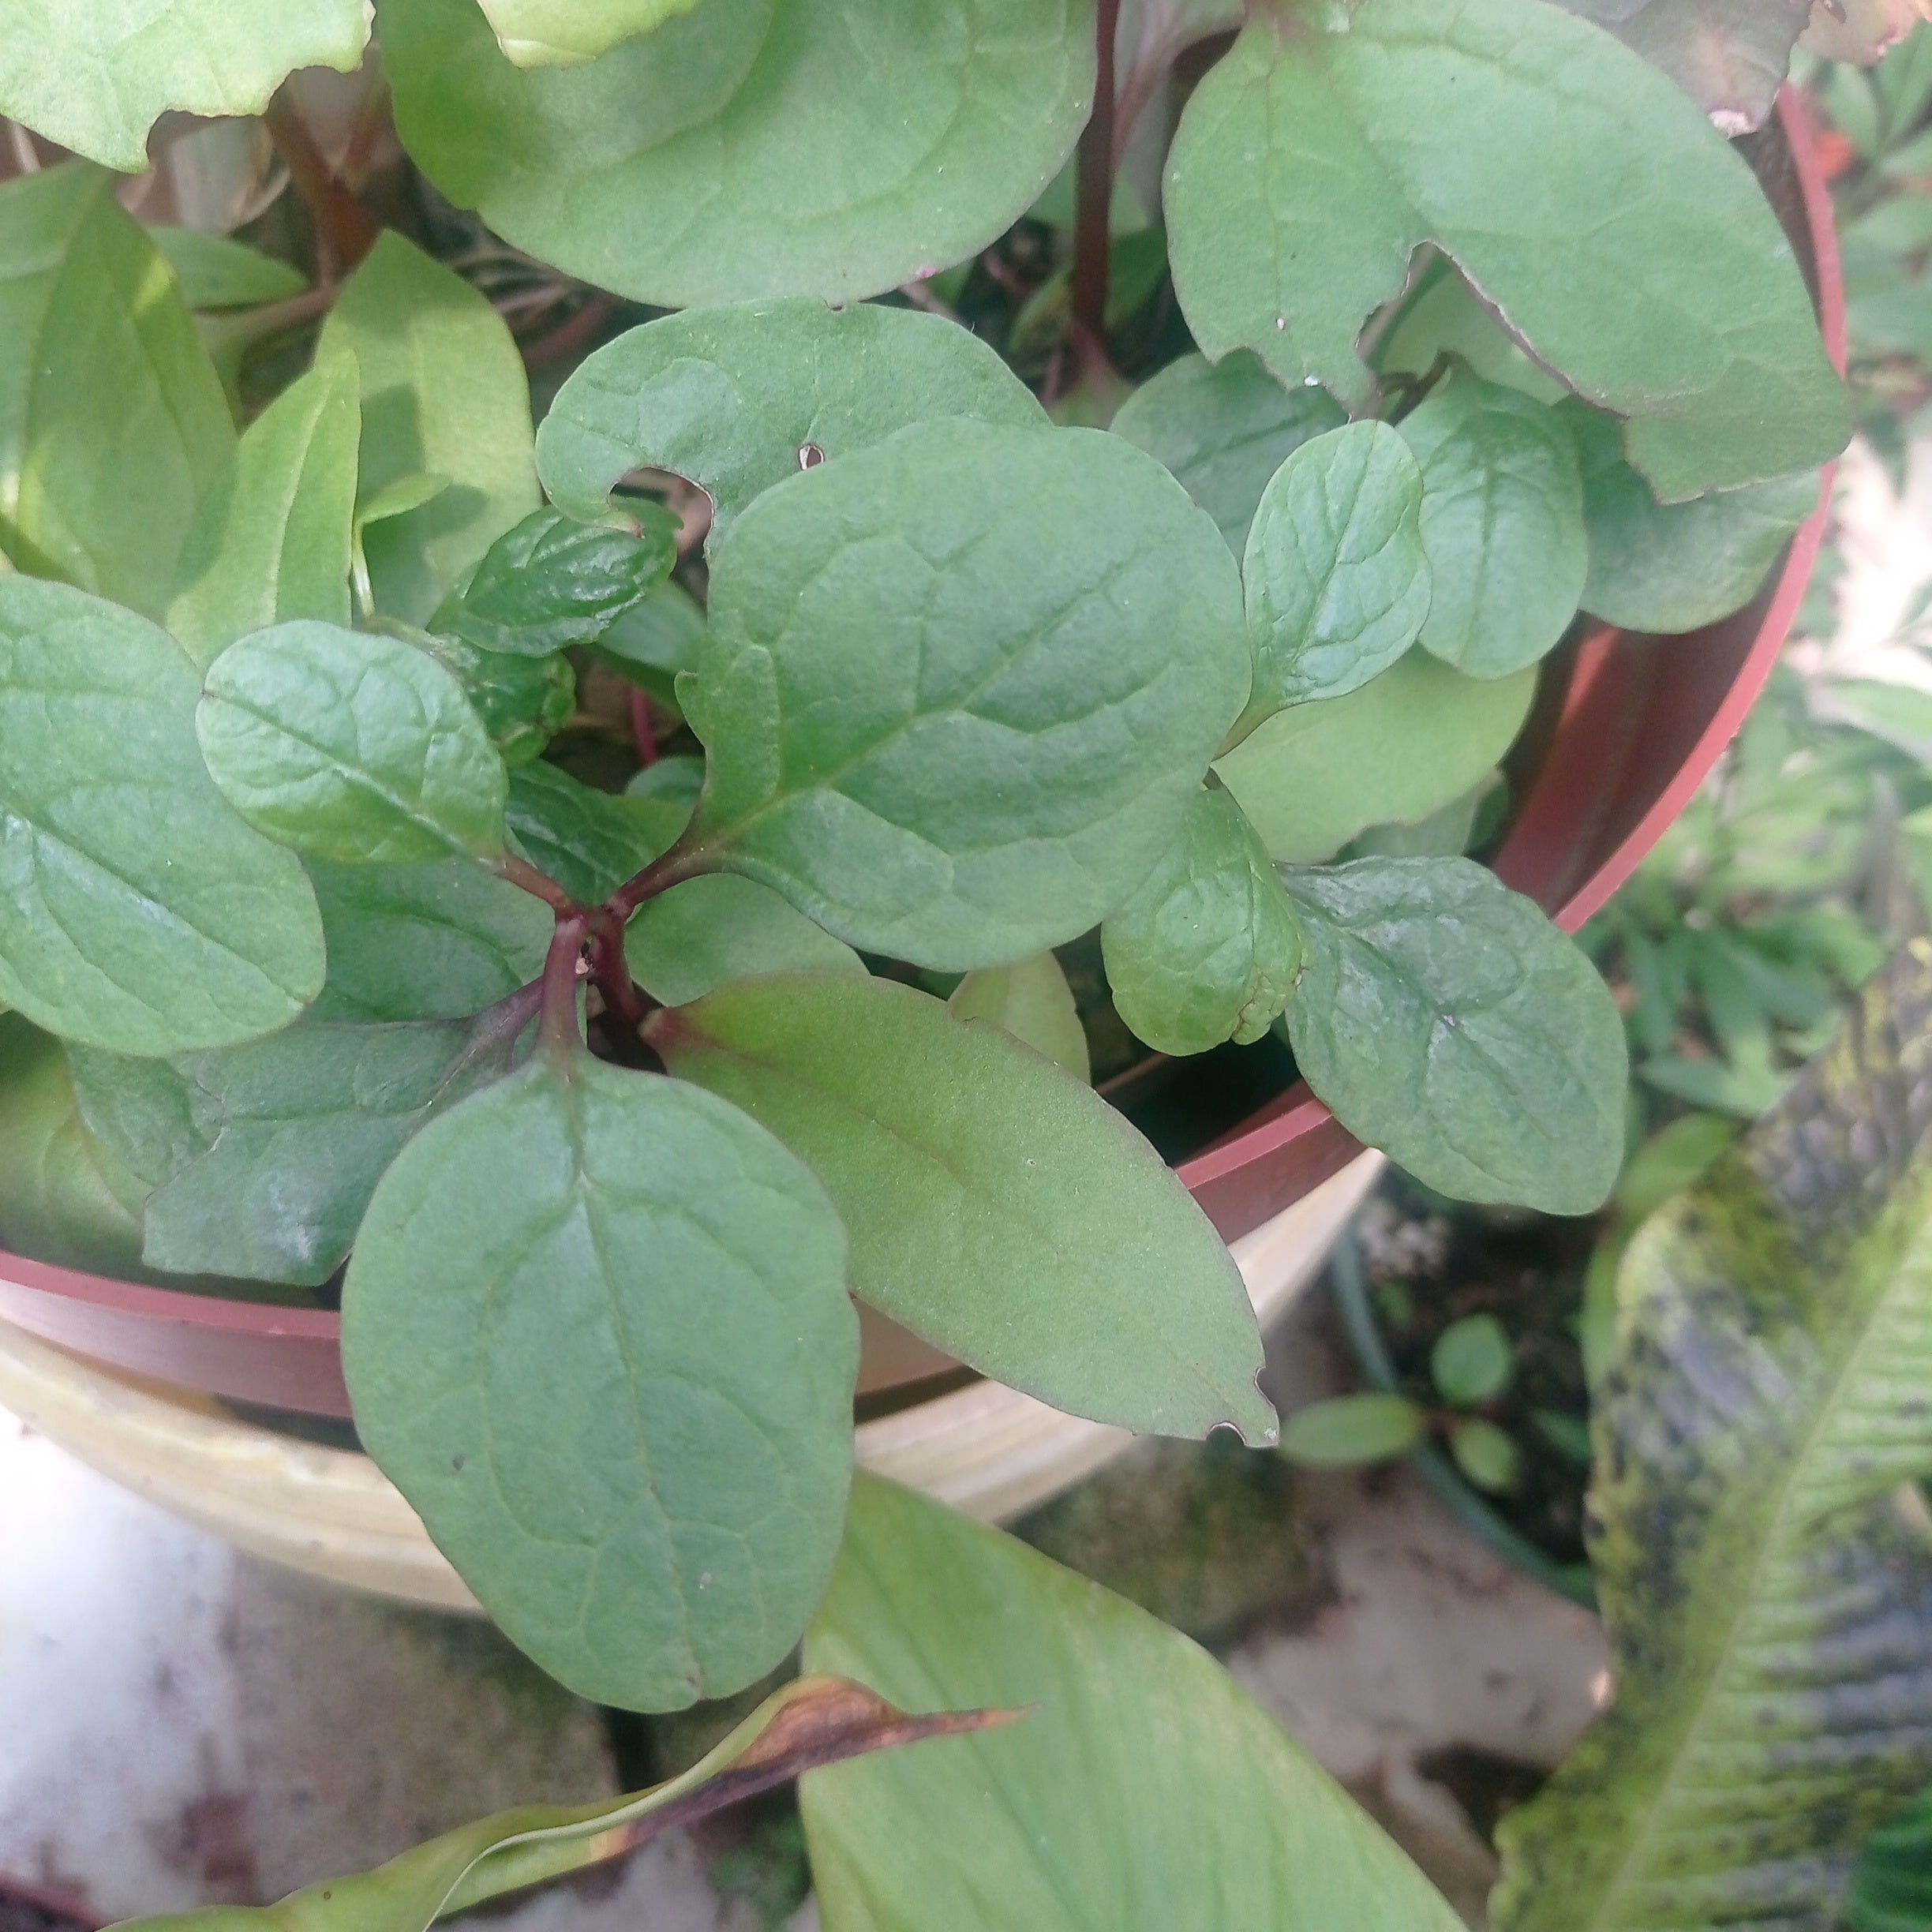 Malabar spinach seeds